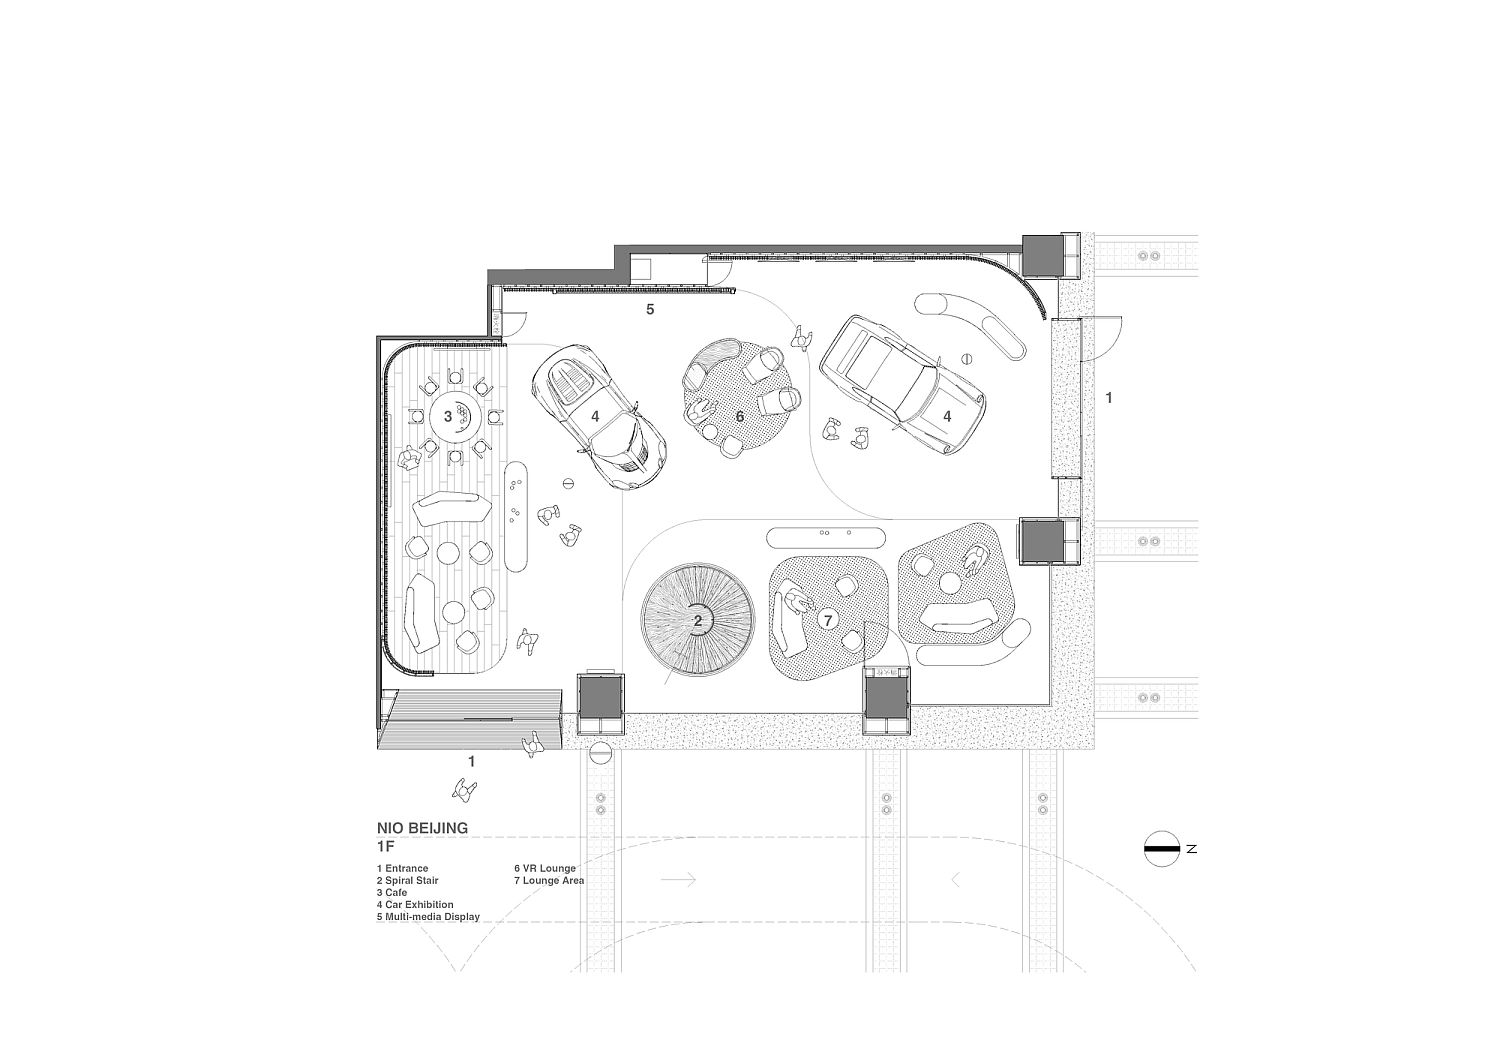 First floor plan of the modern consumer center of NIO in Beijing